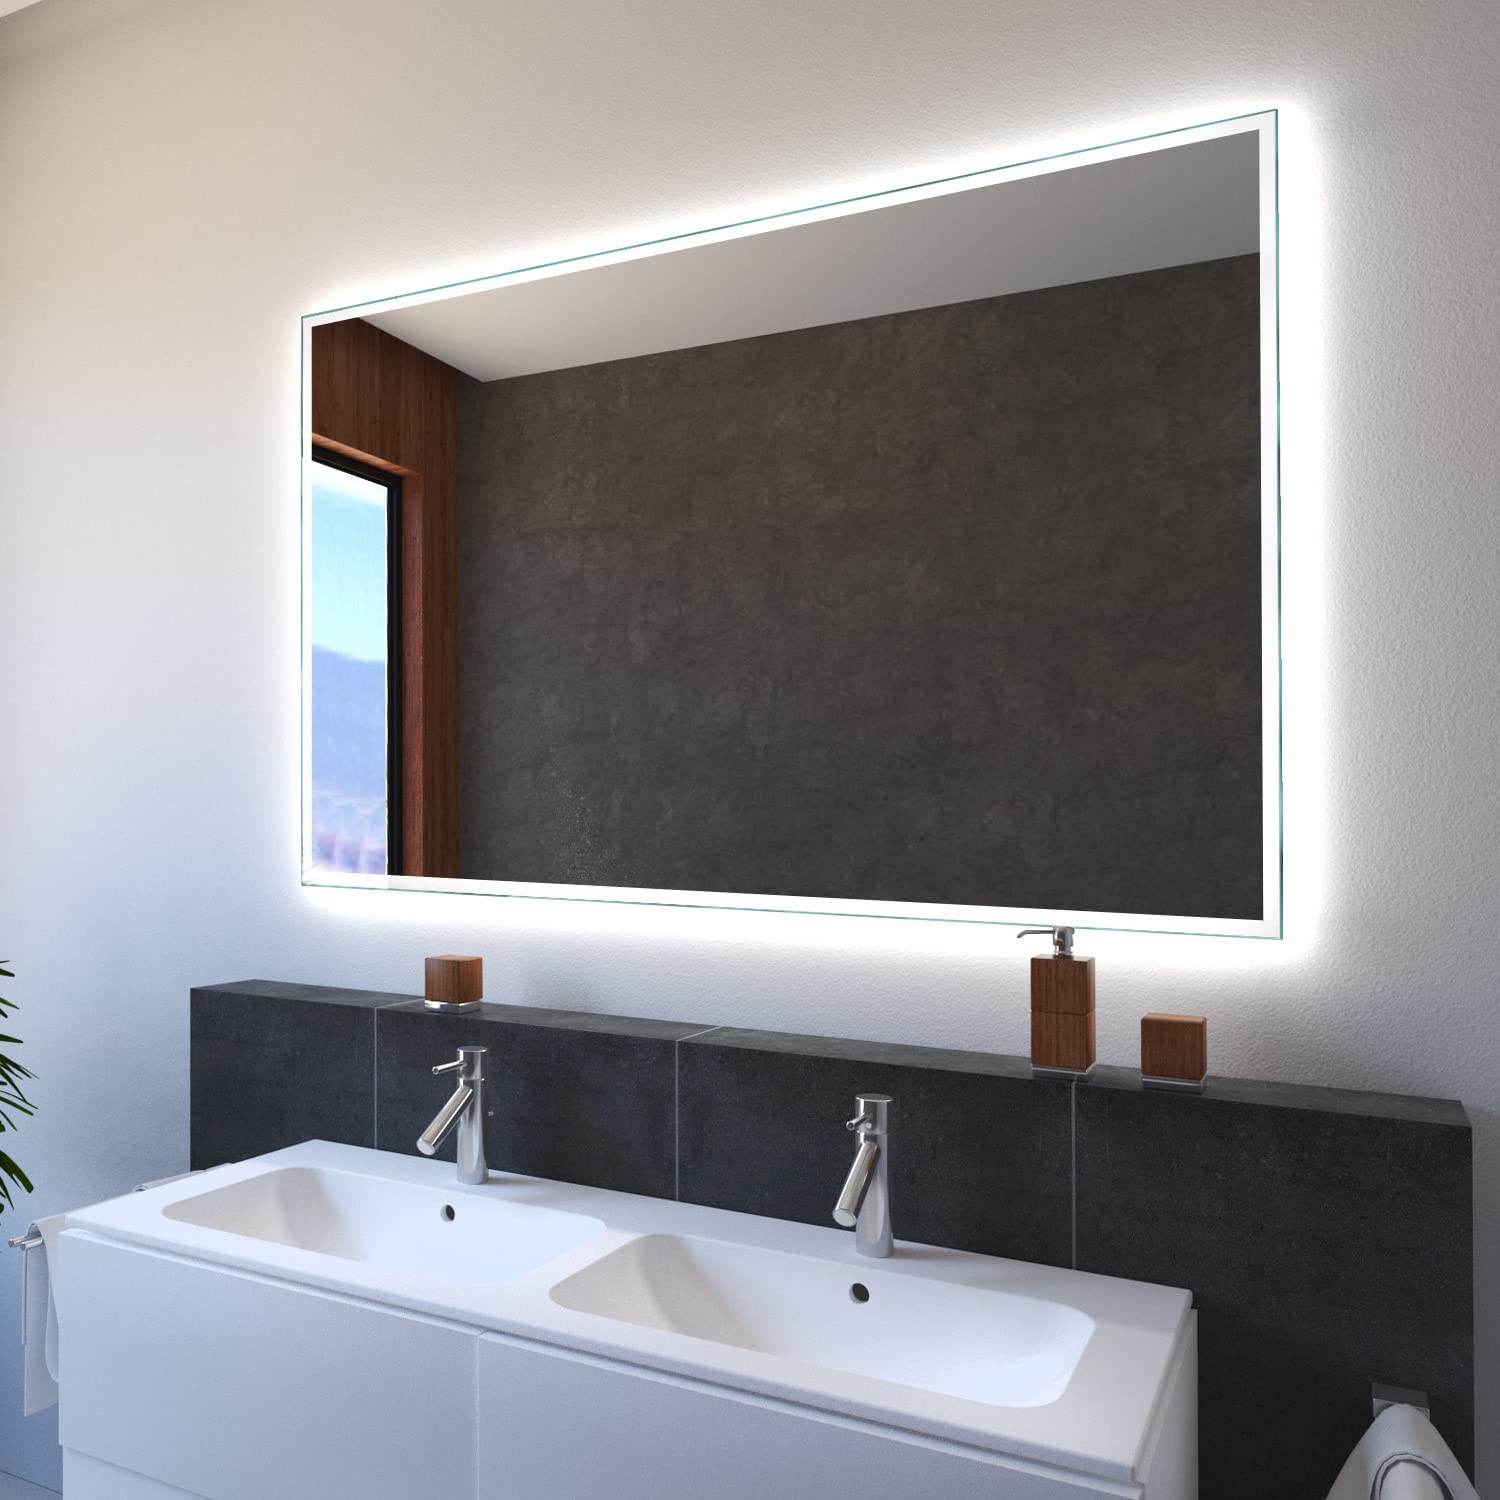 SARAR Wandspiegel mit schmaler rundum LED-Beleuchtung 120x80cm Made in Germany Designo MA4111 Badspiegel Spiegel mit Beleuchtung Badezimmerspiegel nach-auf Maß